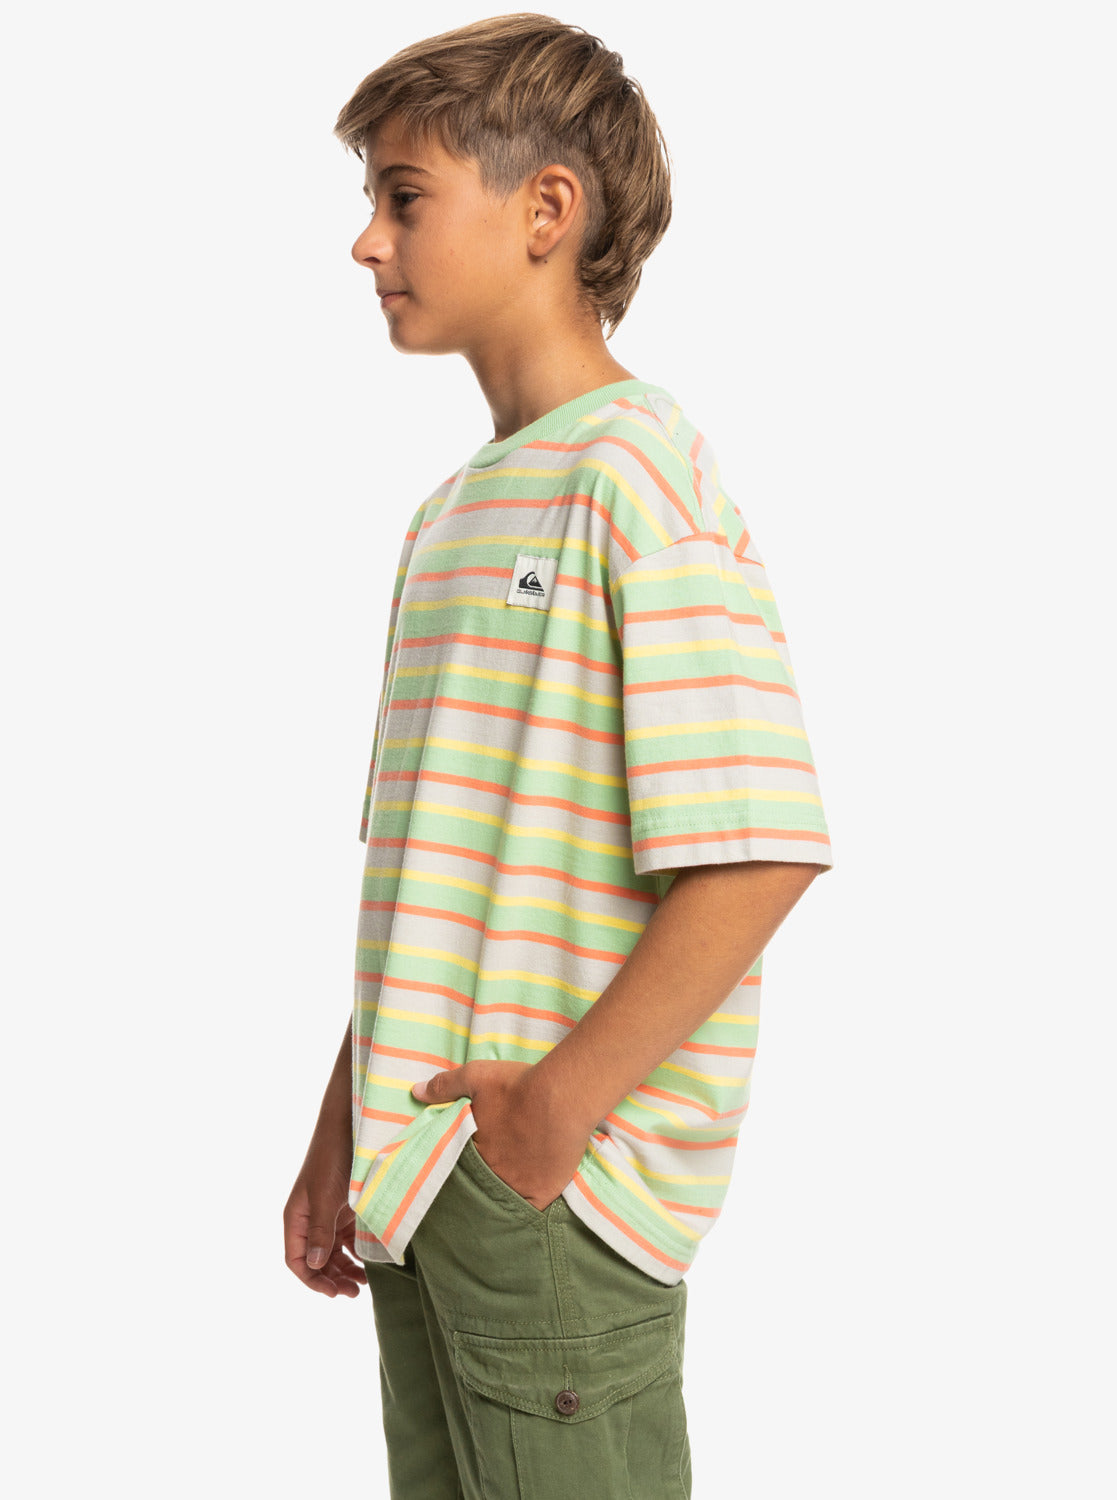 Quiksilver New Stripe Camiseta Niño